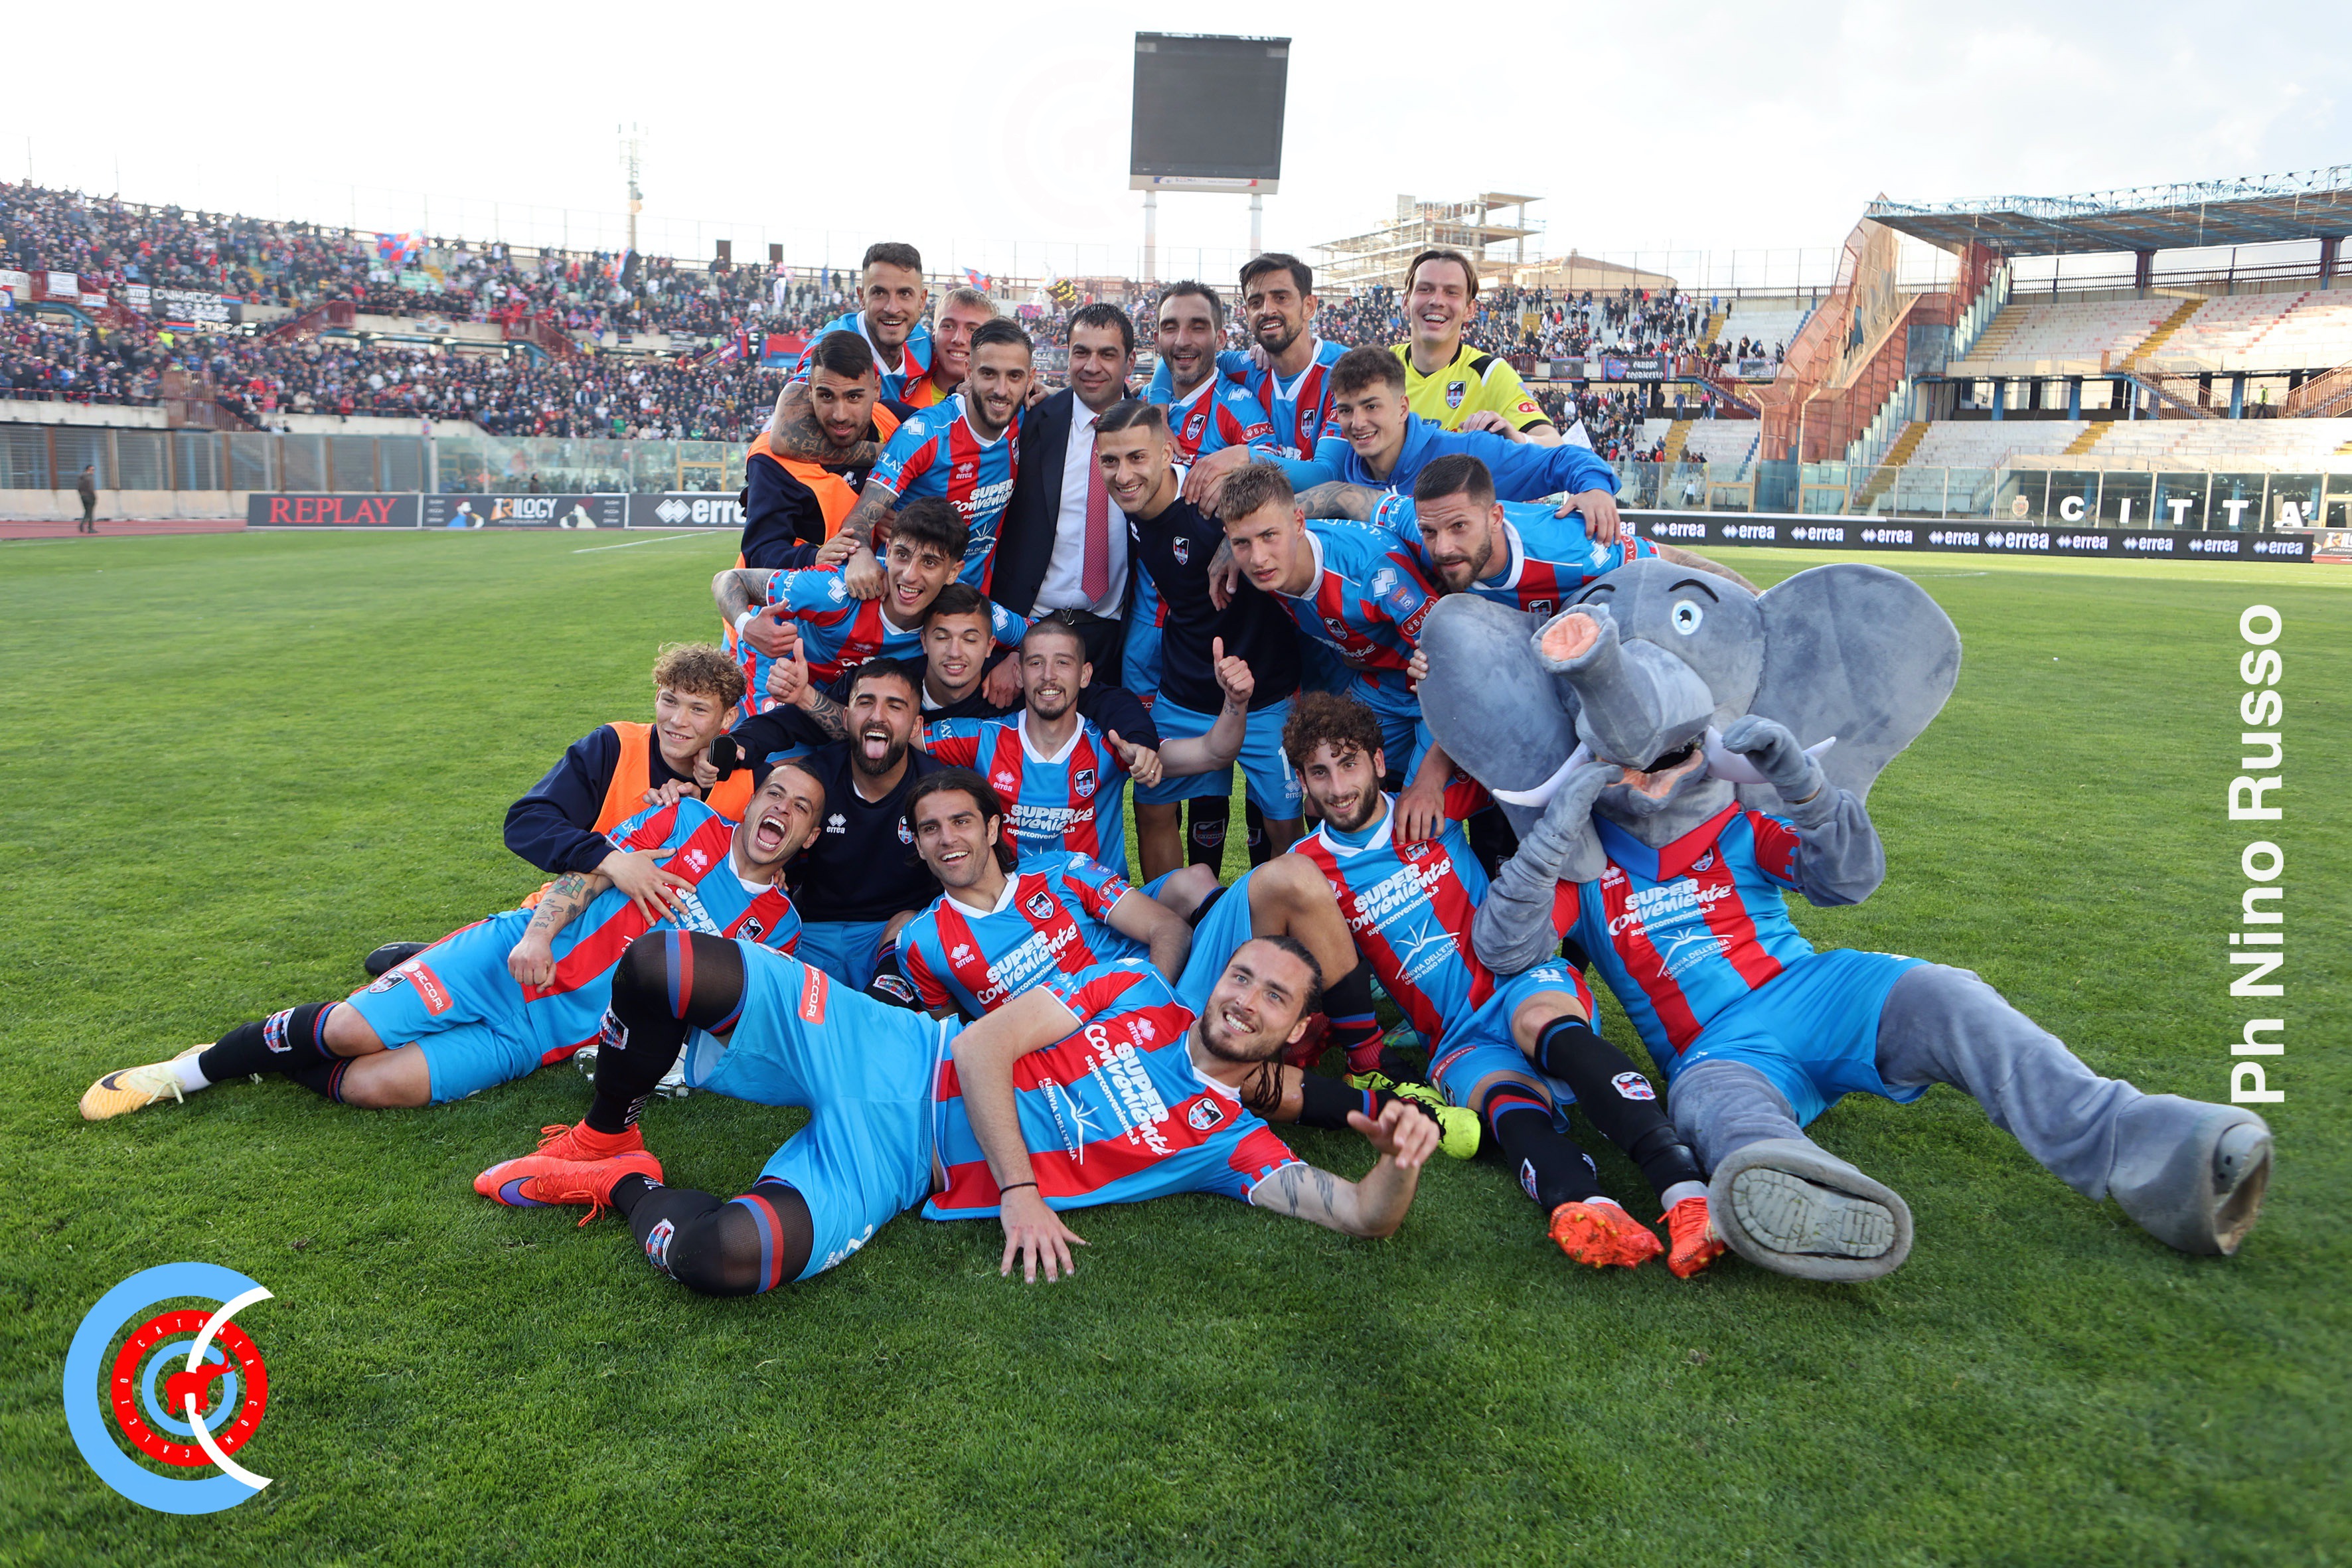 Catania-Cittanova 1-0